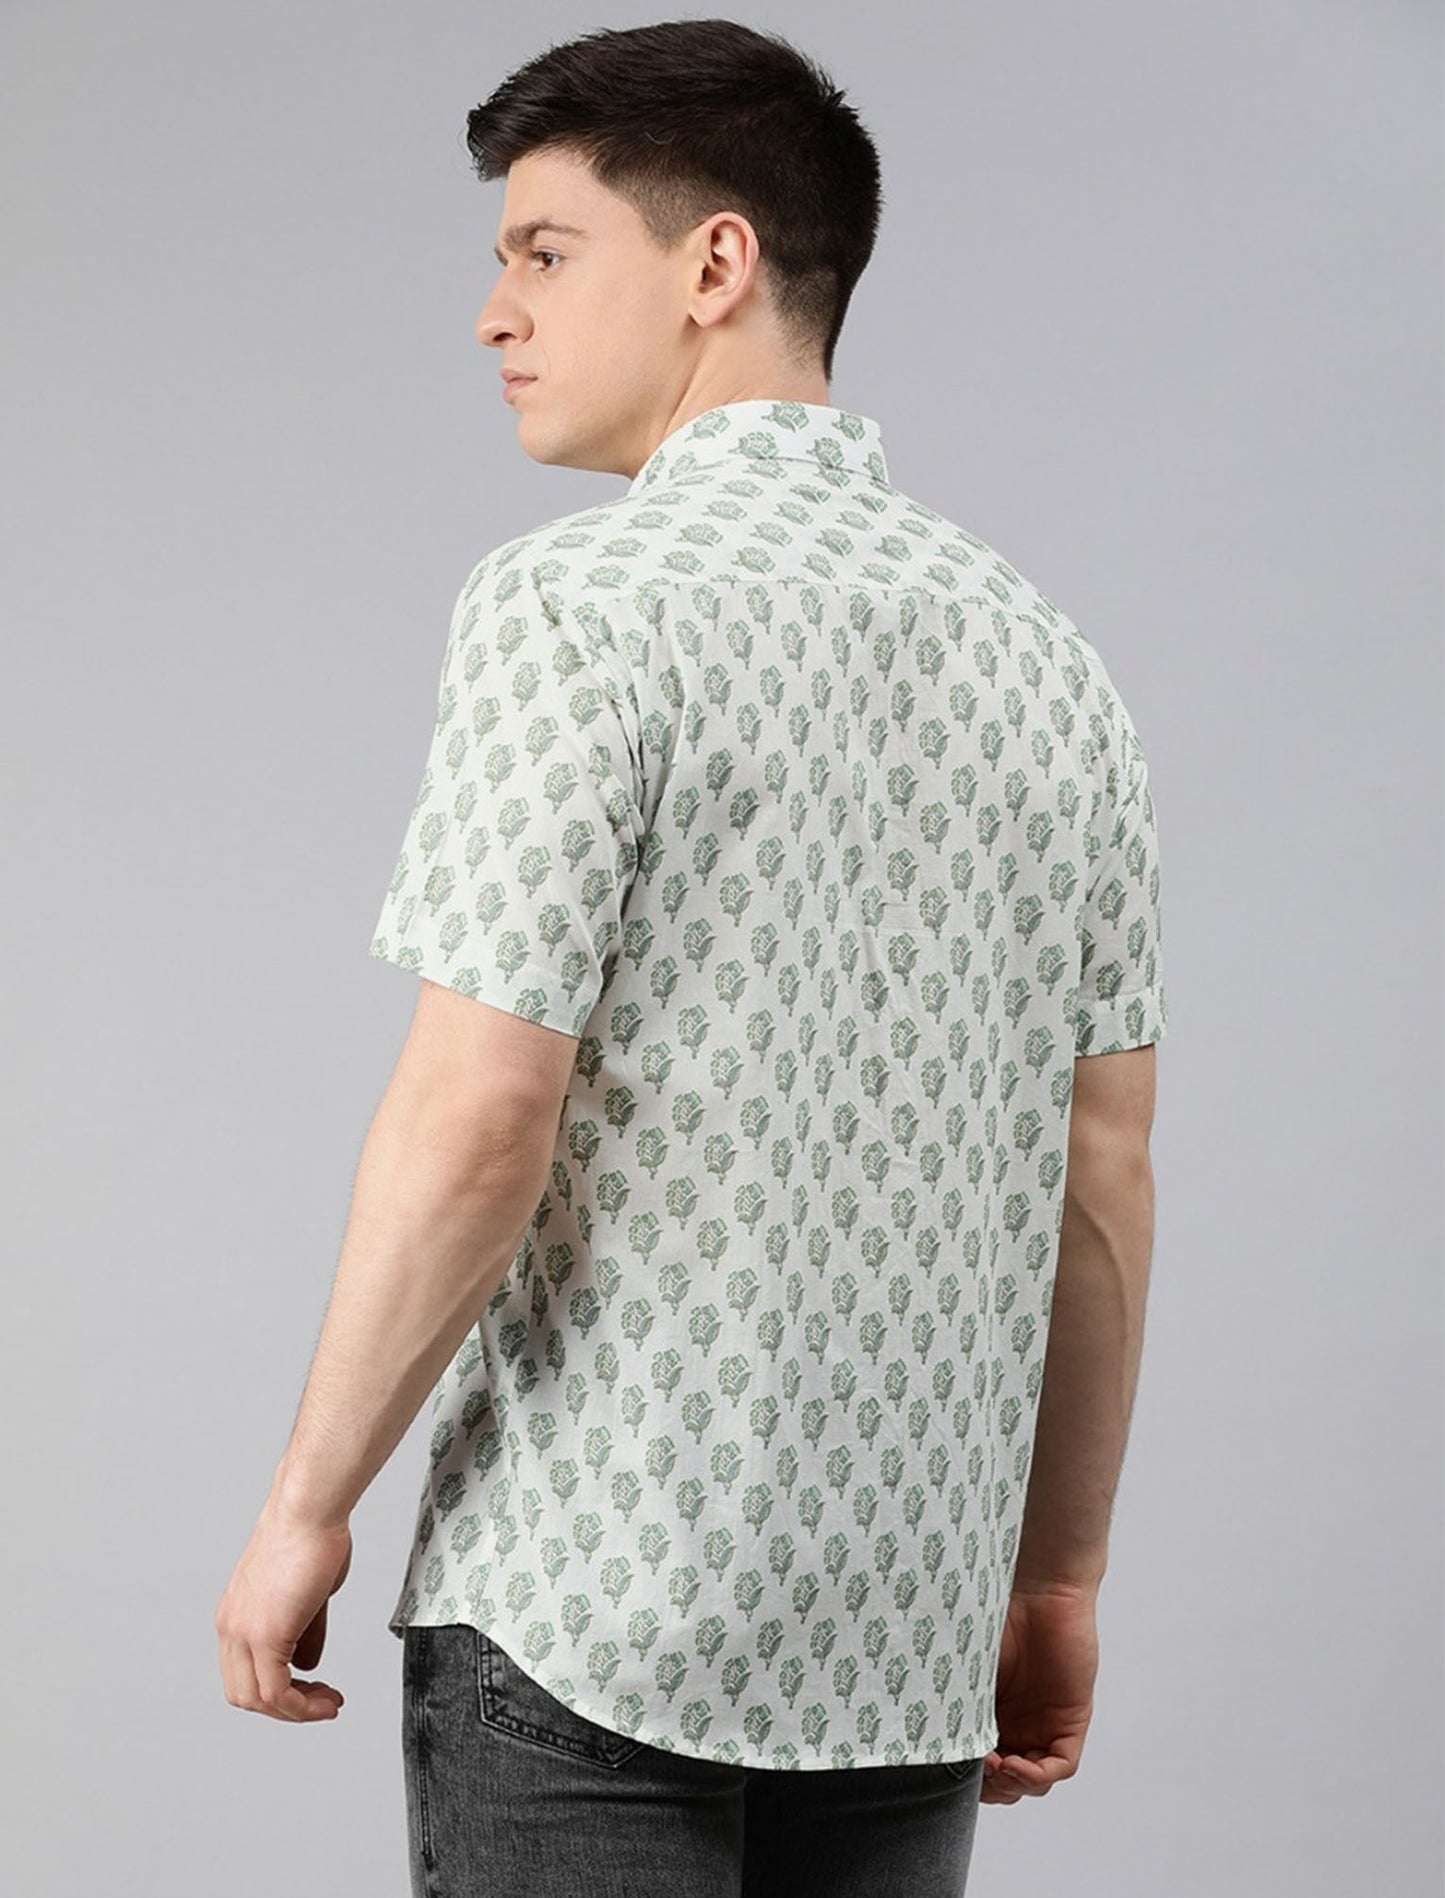 Millennial Men White & Green Printed Casual Shirt